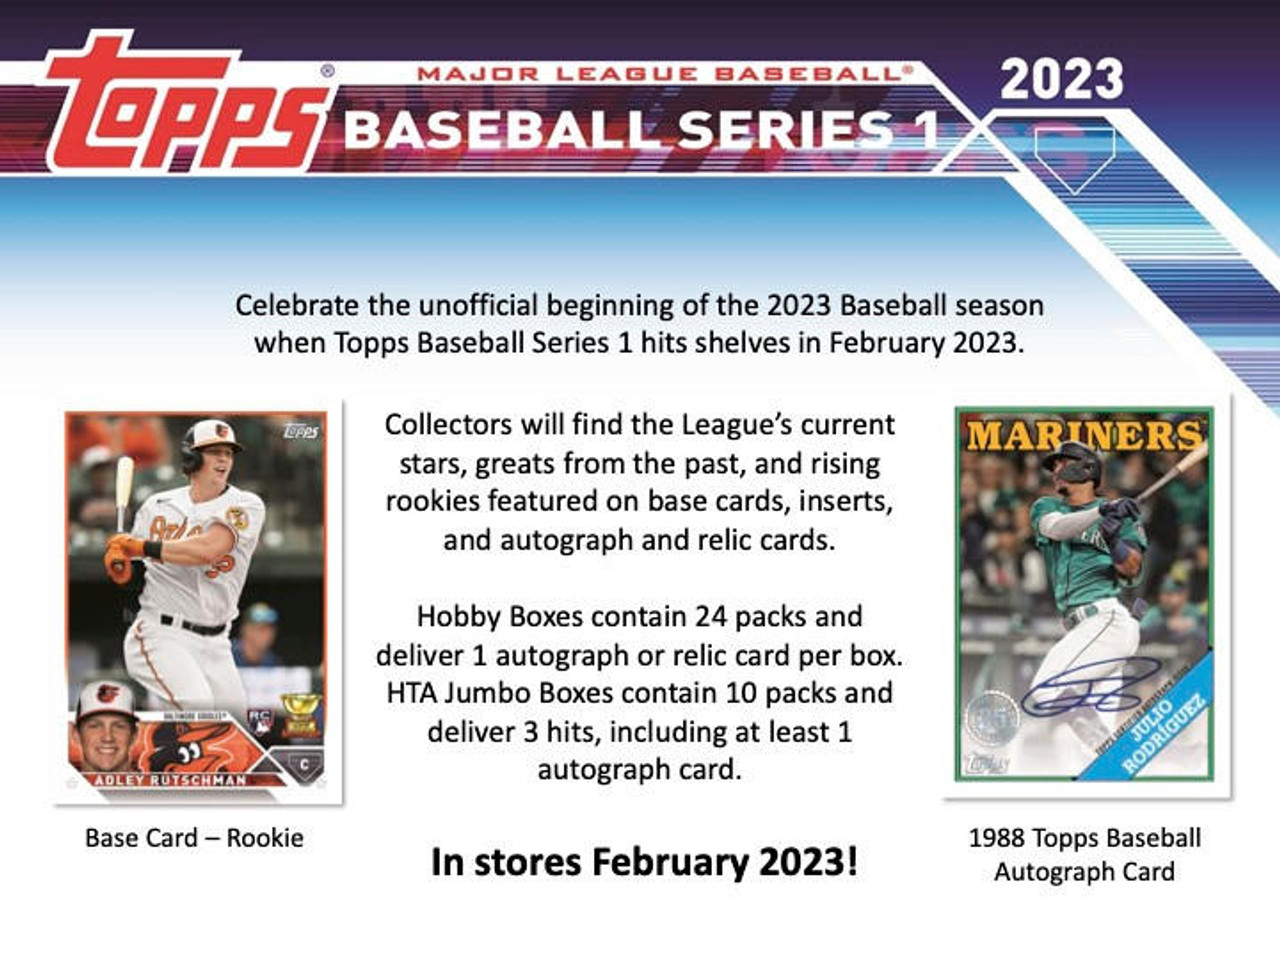 C.J. Cron 2022 Major League Baseball All-Star Game Autographed